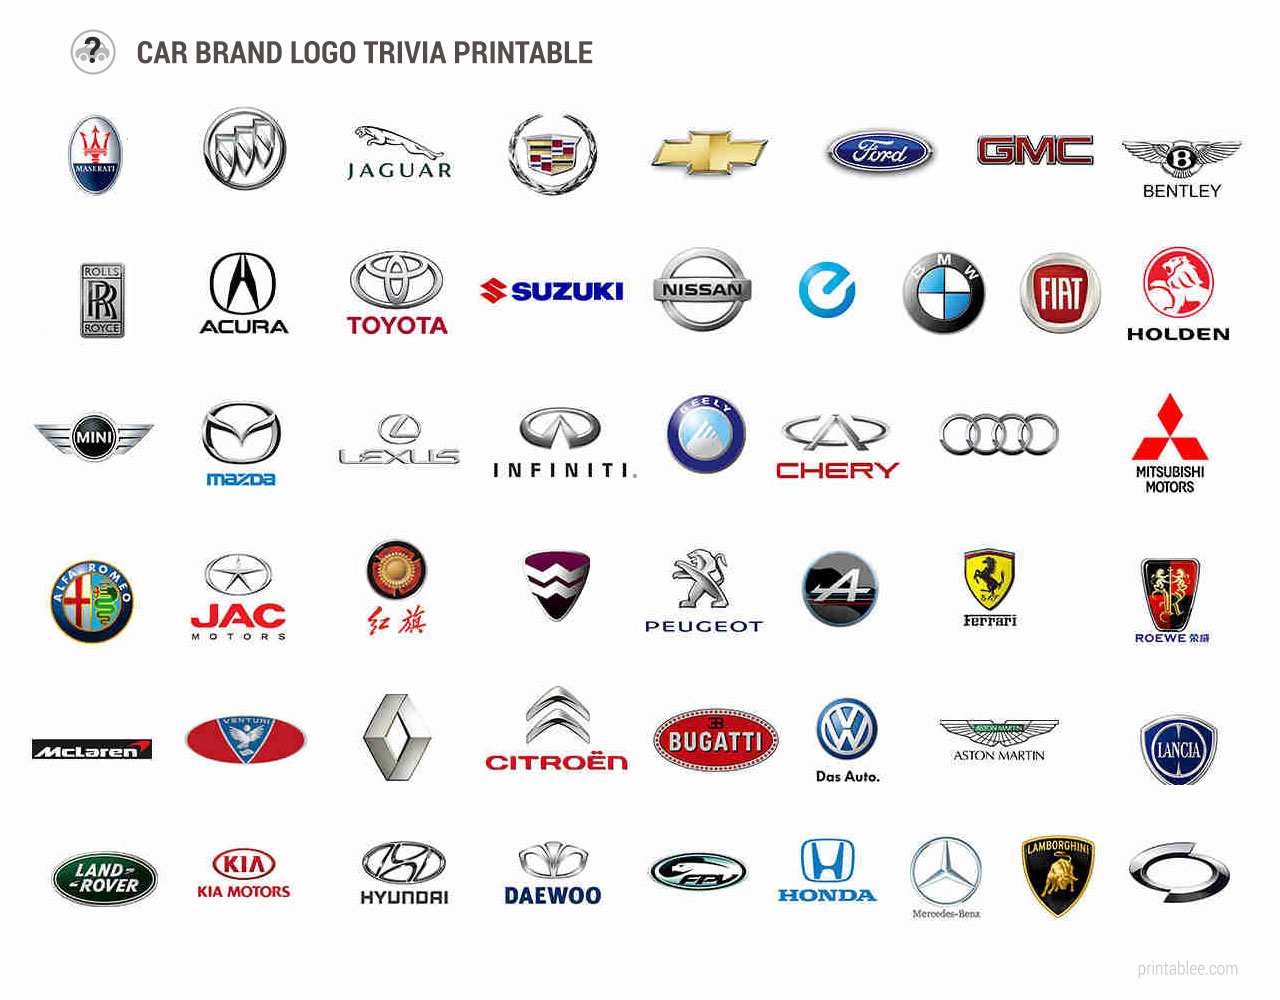 Printable Car Brand Logo Trivia Game 1050460 